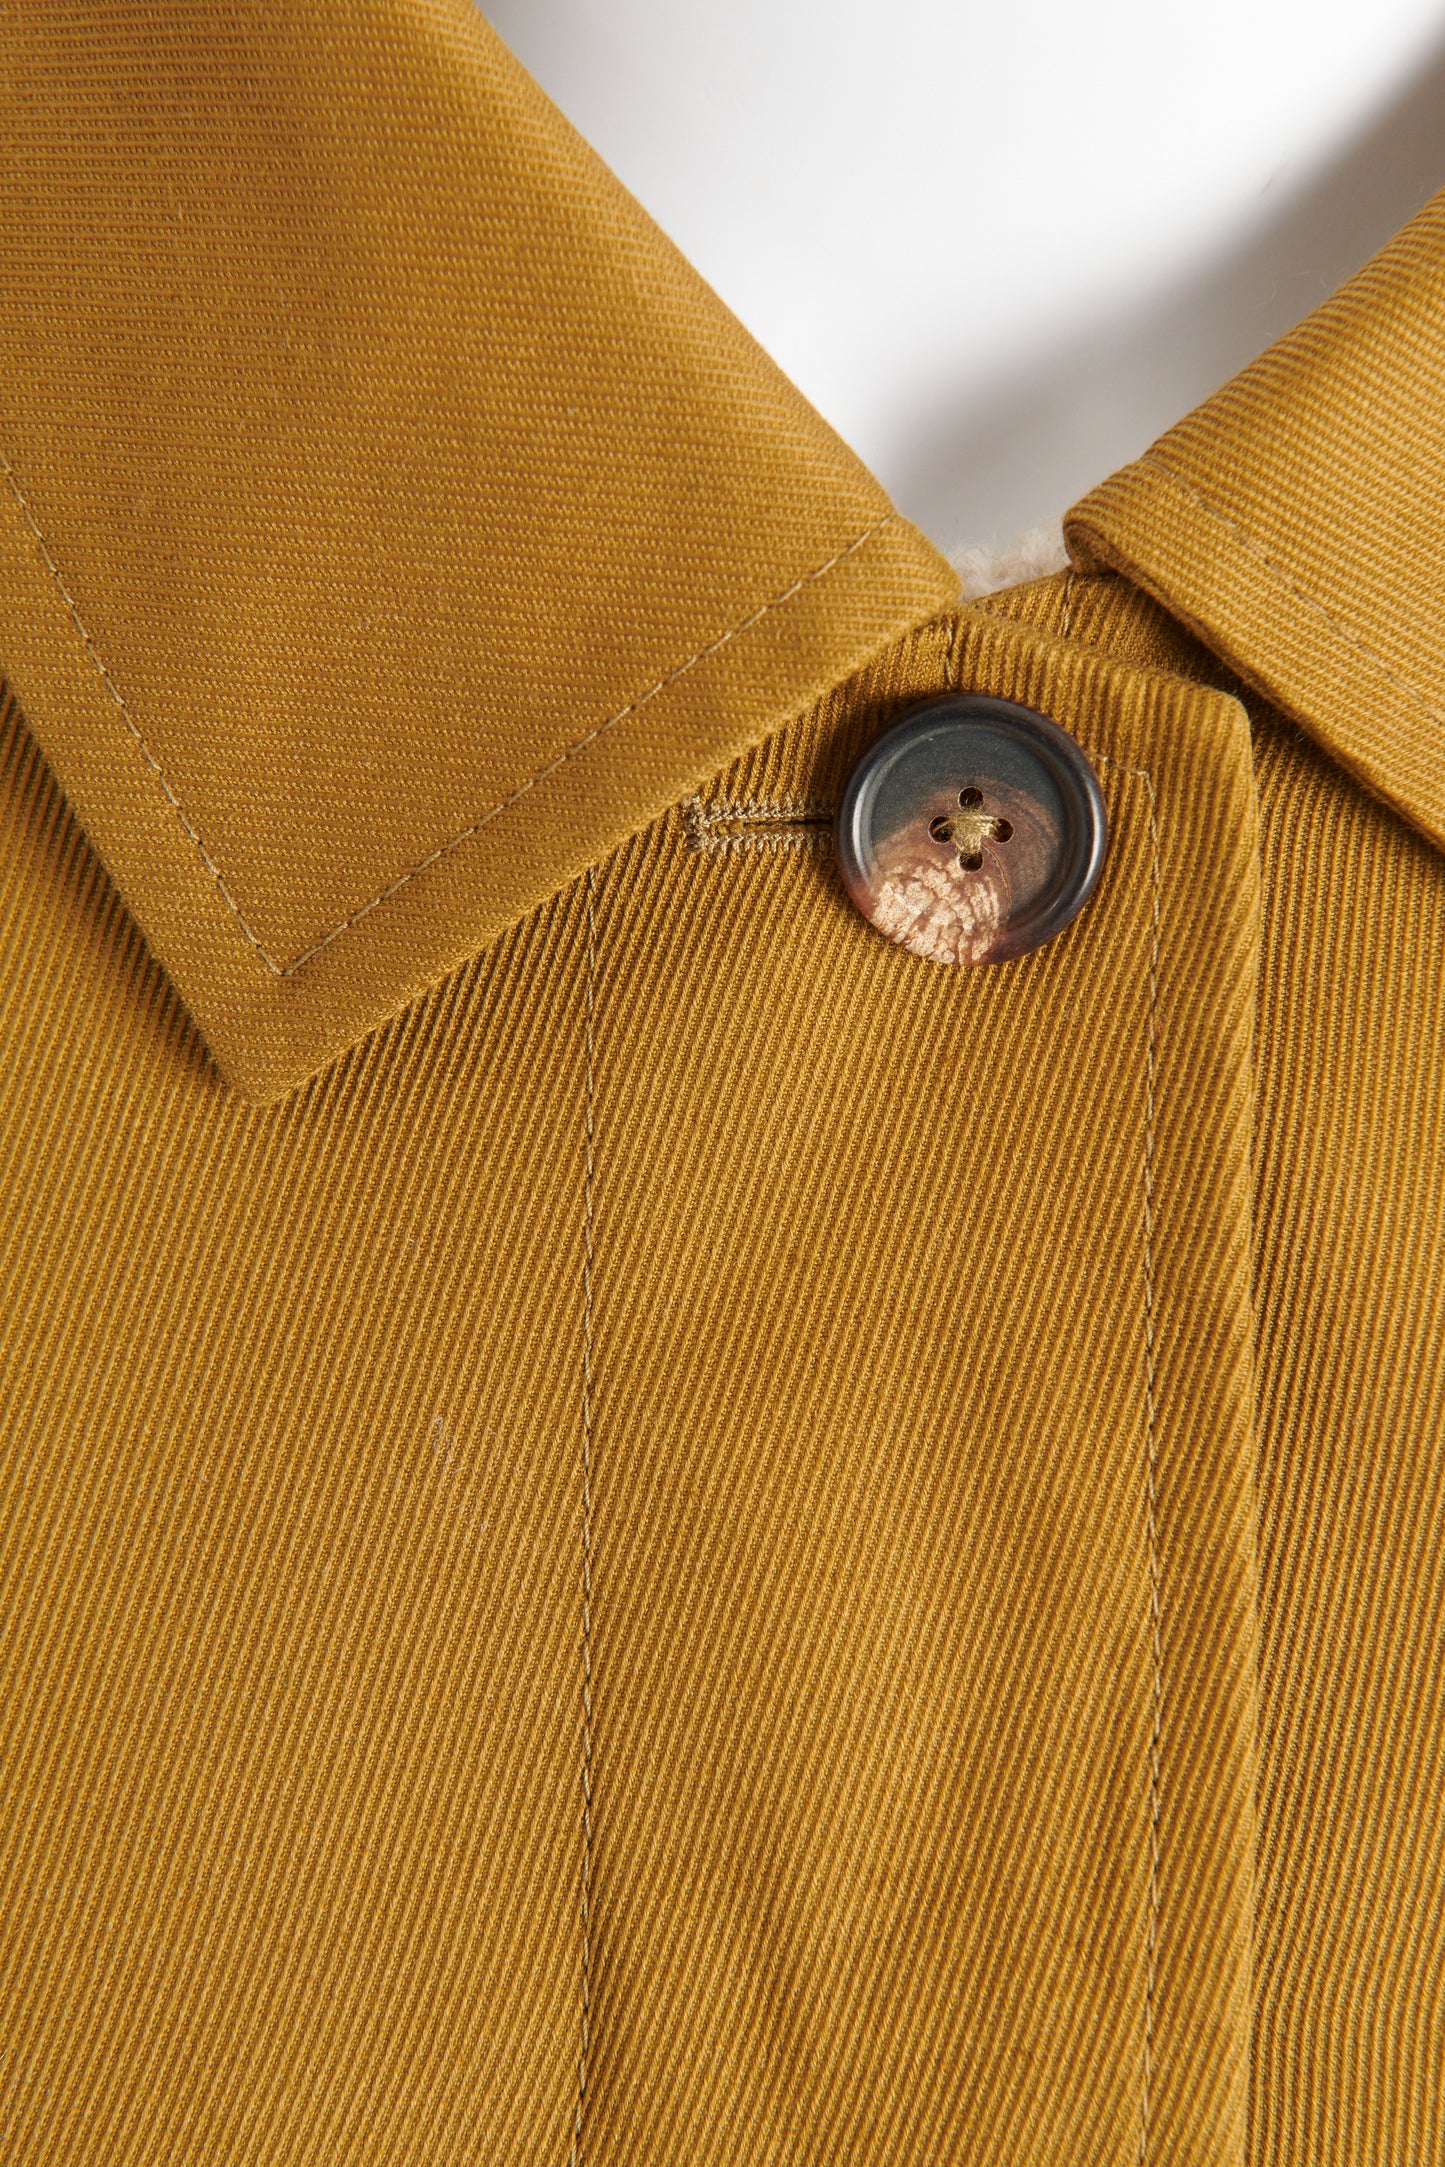 Khaki Cotton Twill Preowned Button Up Jacket